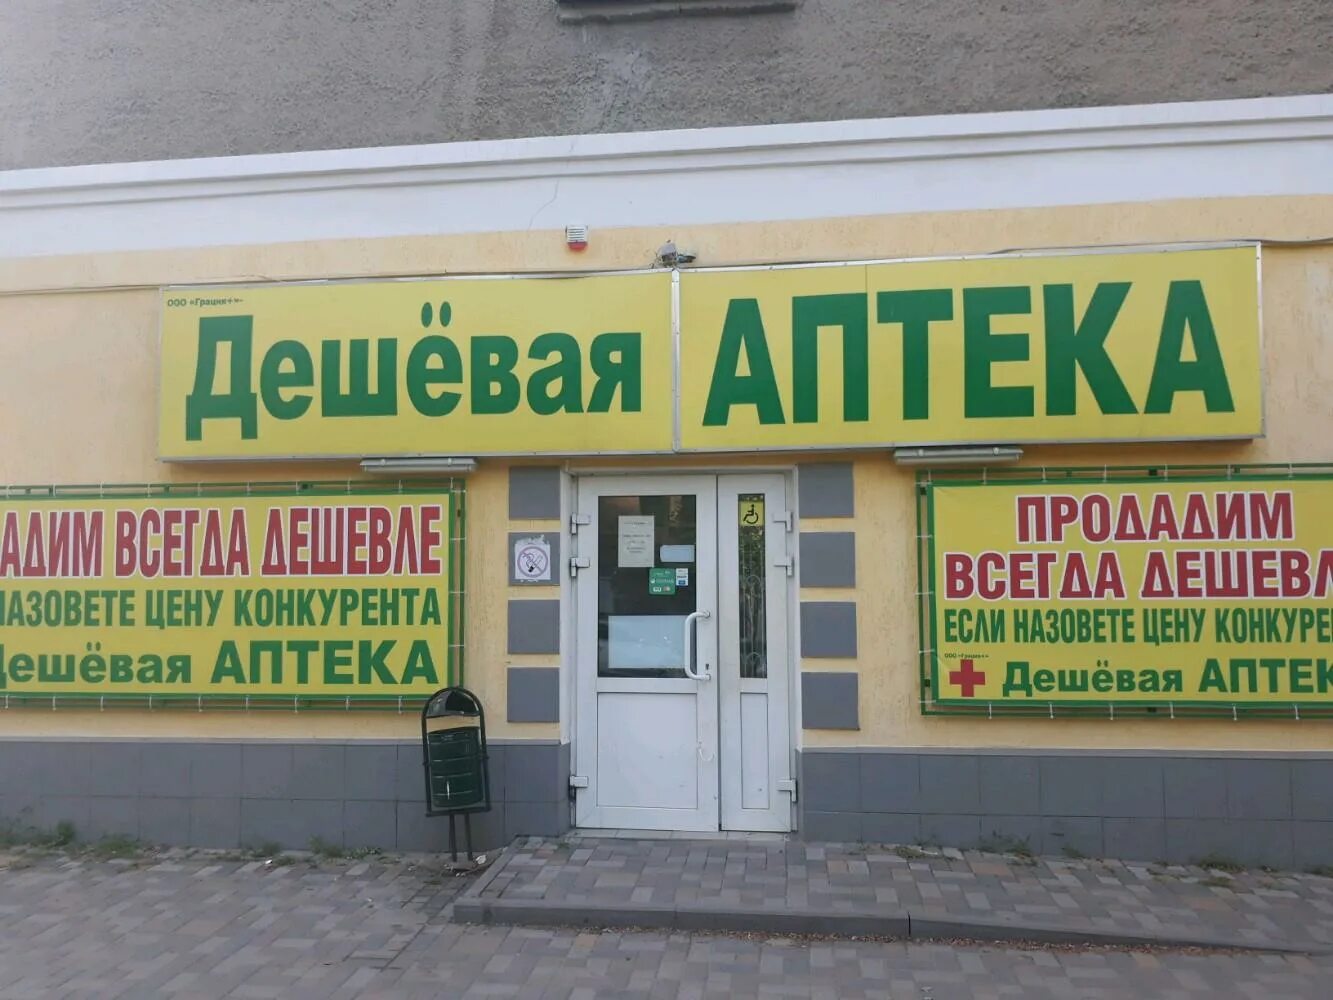 Дешевая аптека. Аптека дешевая аптека. Самая дешевая аптека. Дешевые аптеки в Москве. Дешевая аптека ру